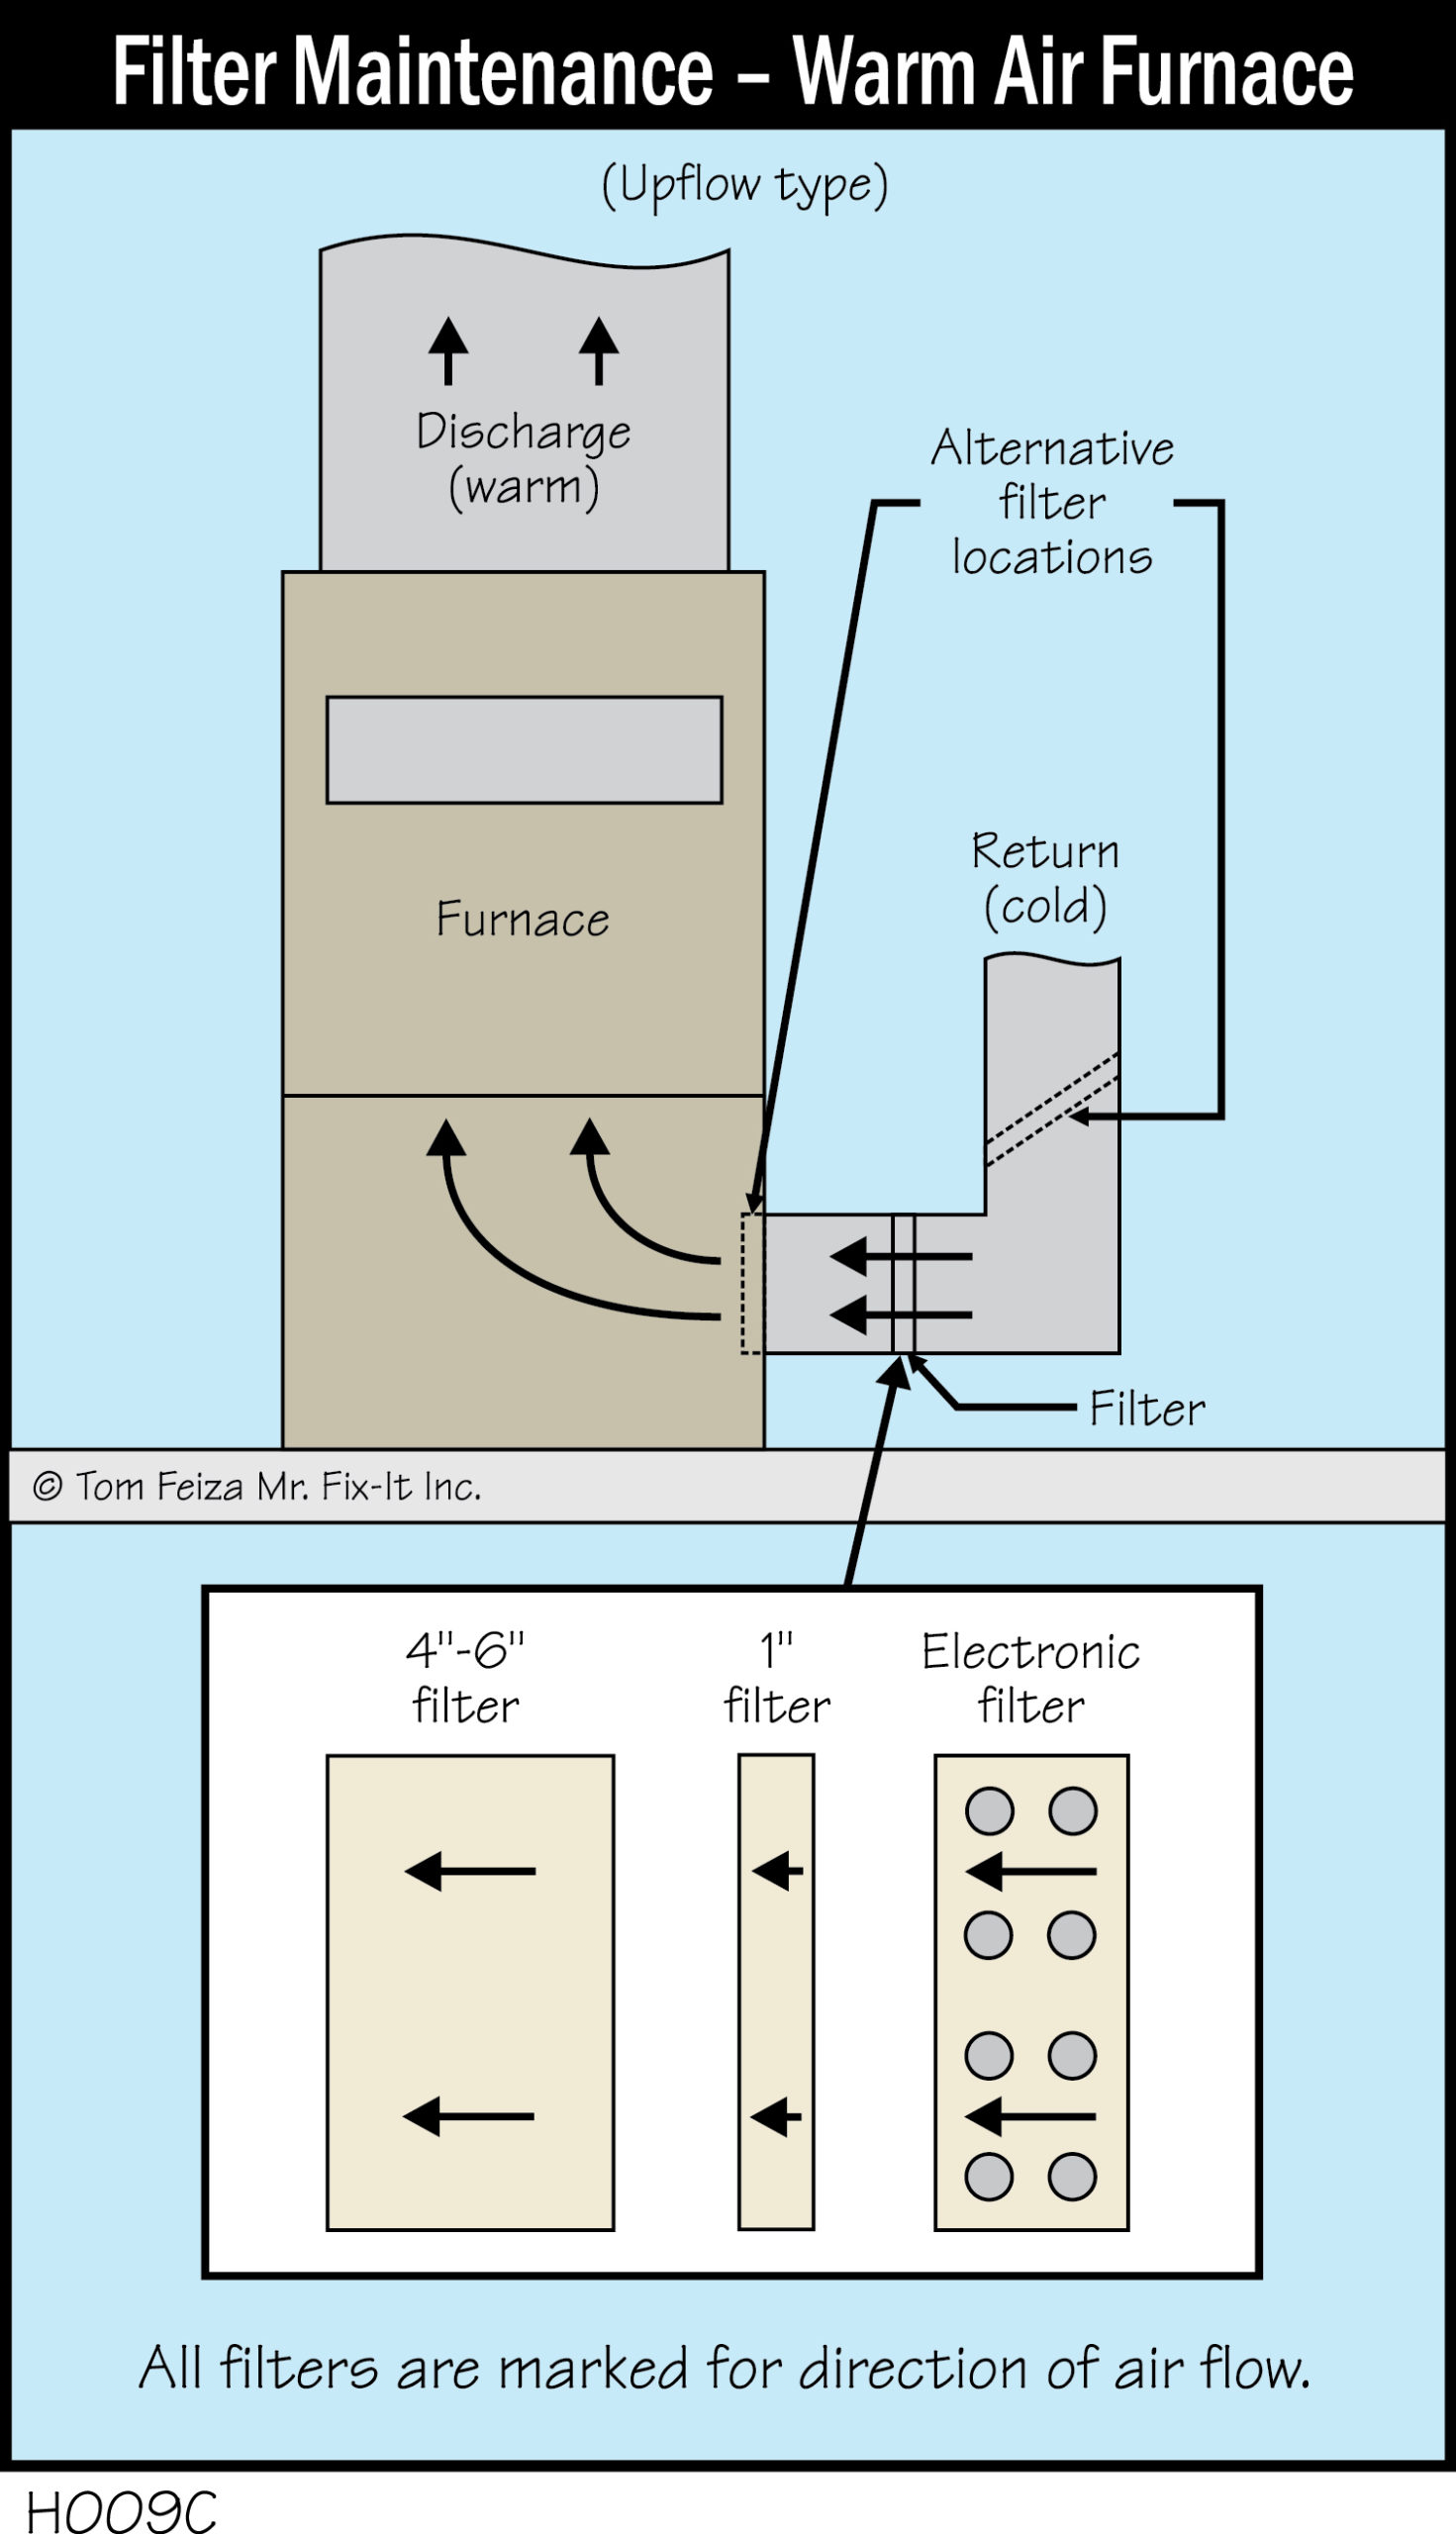 H009C - Filter Maintenance - Warm Air Furnace